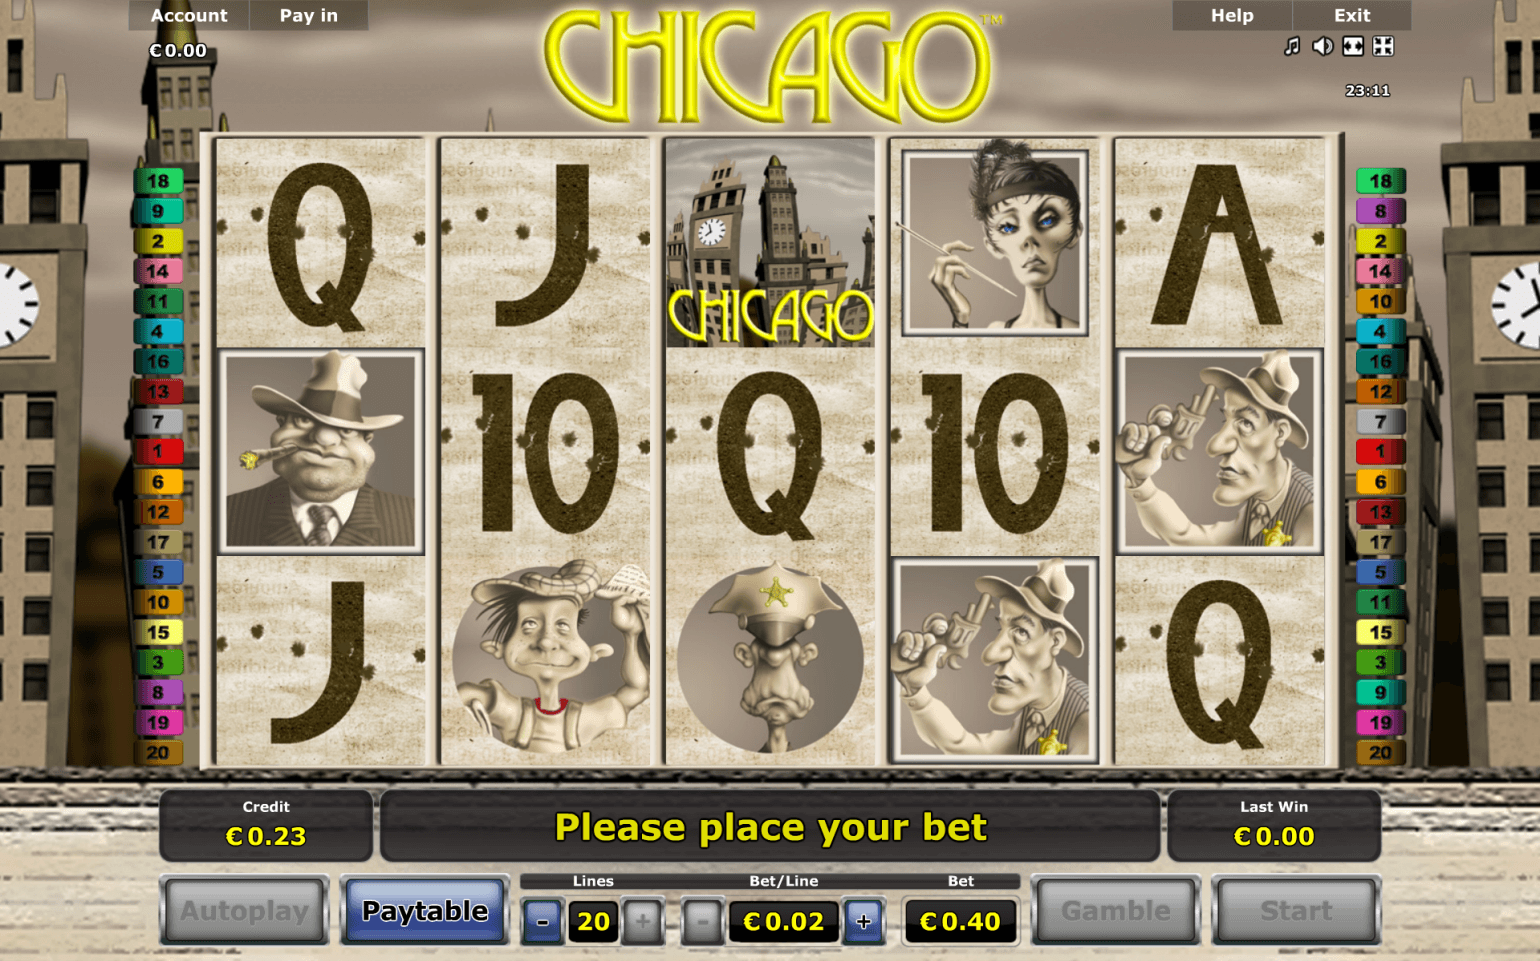 Chicago kortspel poker betting xmas